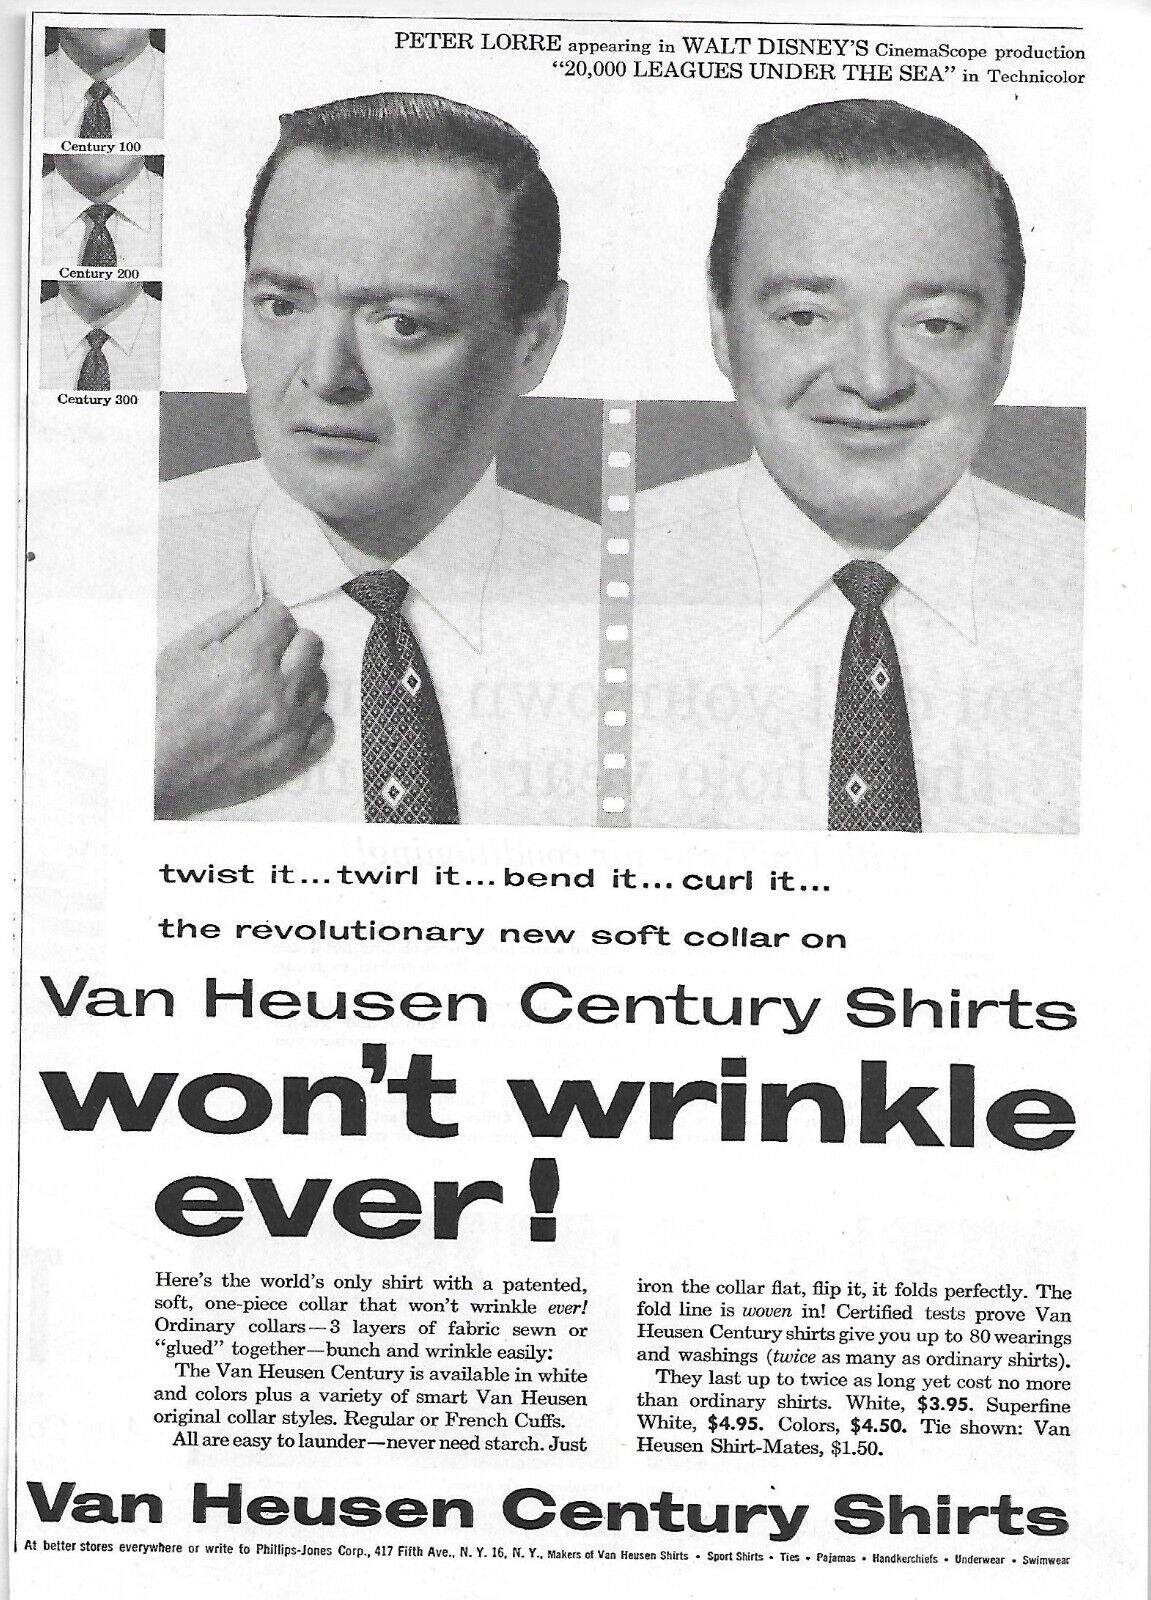 Vintage 1954 Peter Lorre magazine ad for Van Heusen shirts, Walt Disney